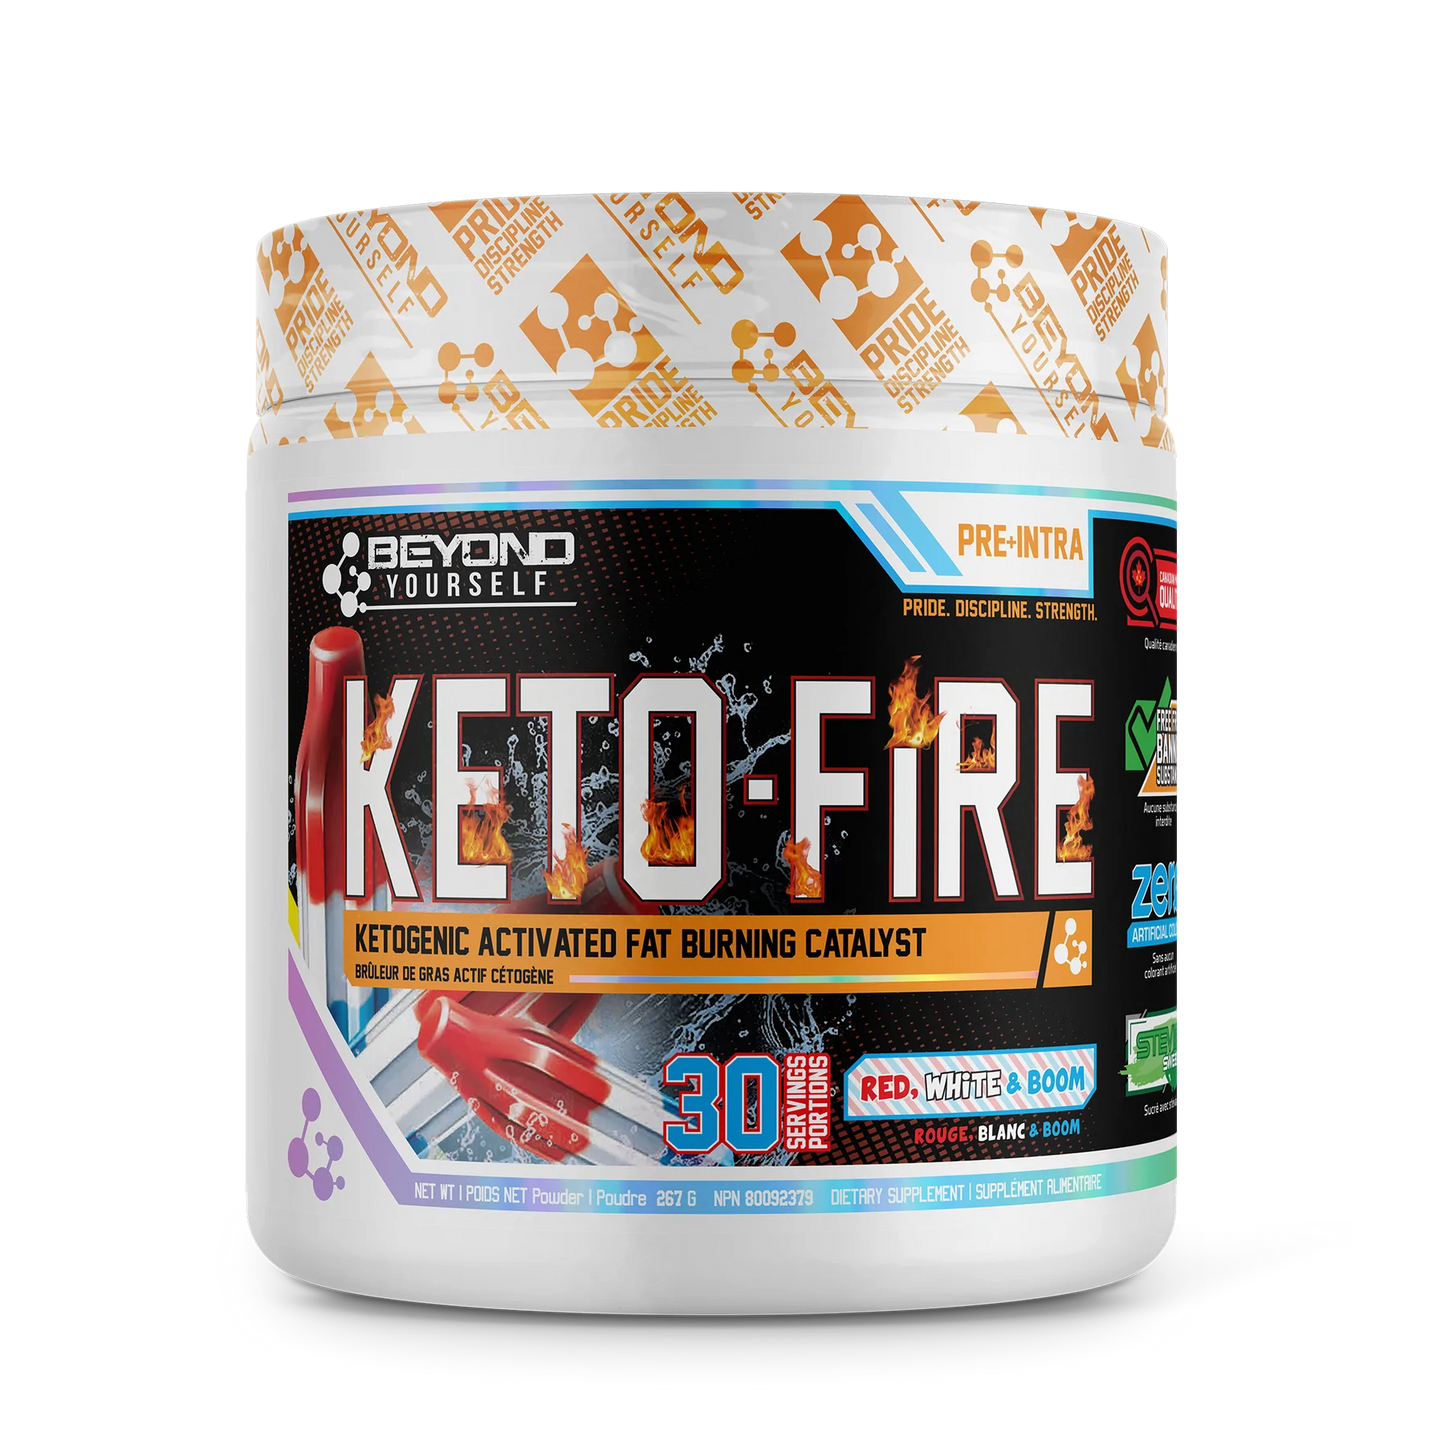 Keto-Fire